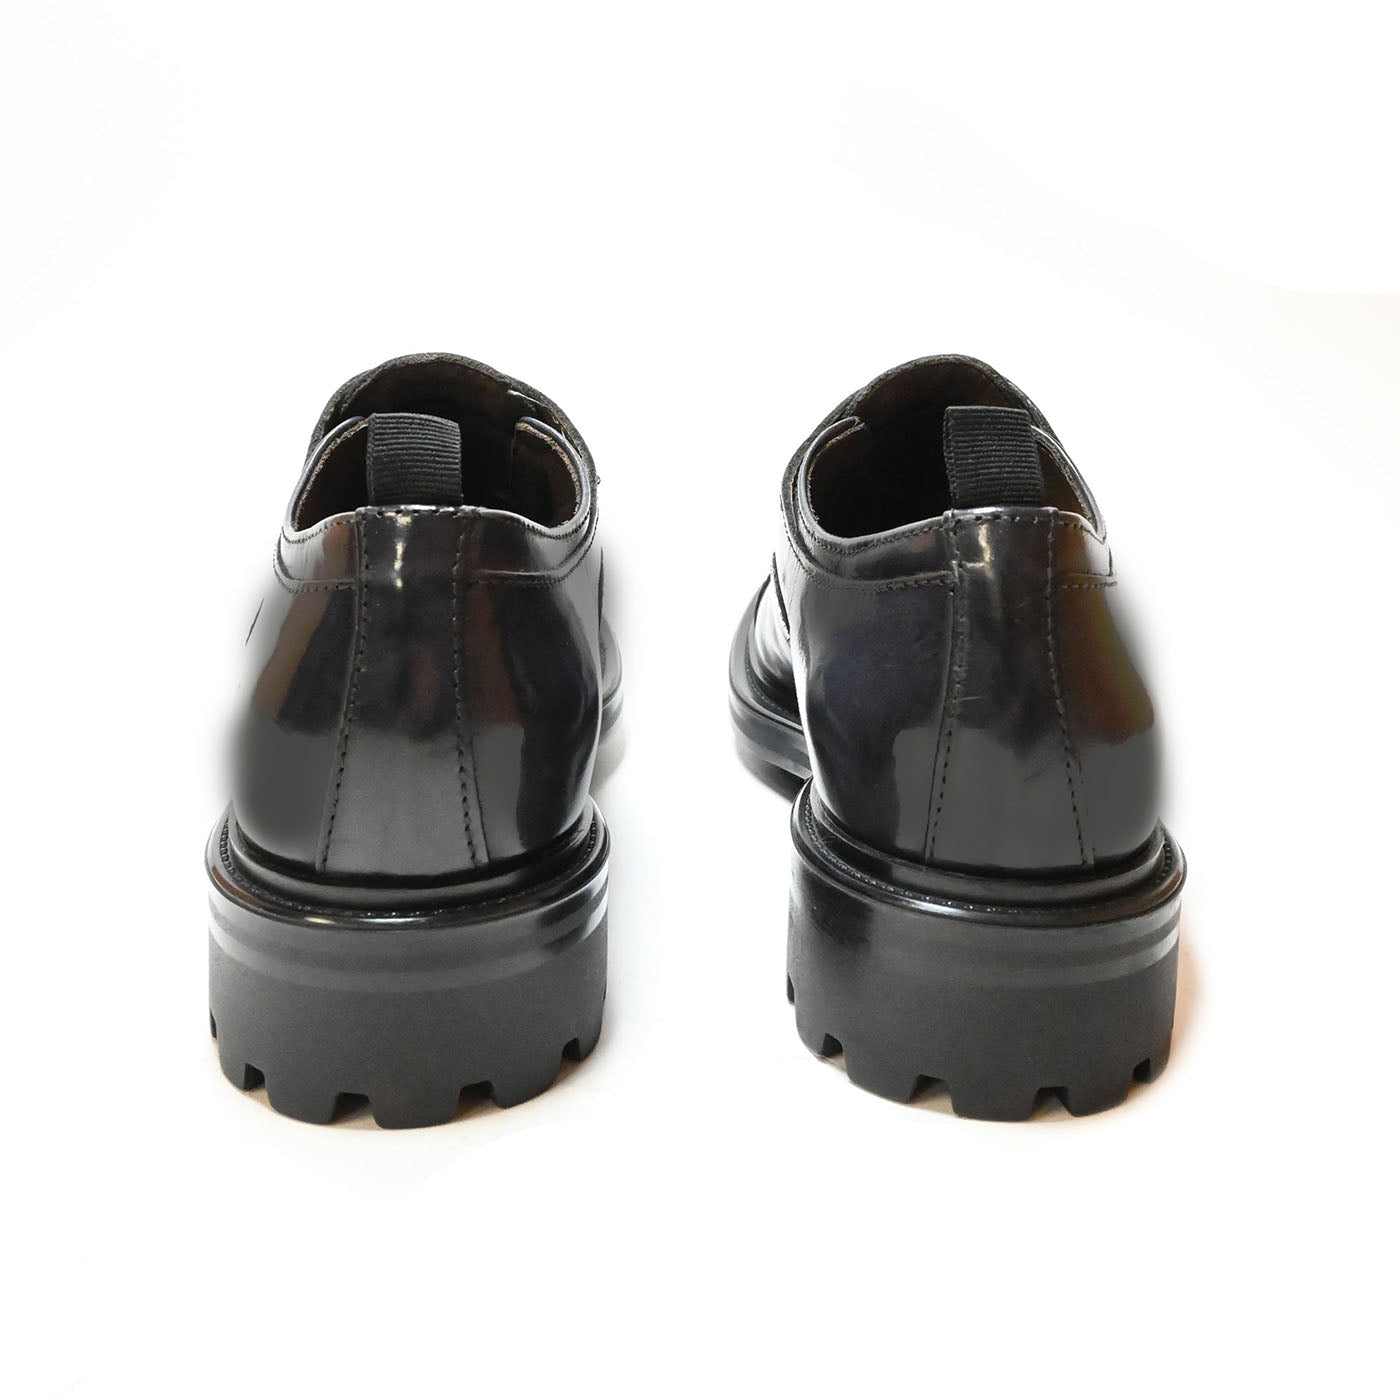 BRIDGE 04 - british shoes leather BLACK - History541